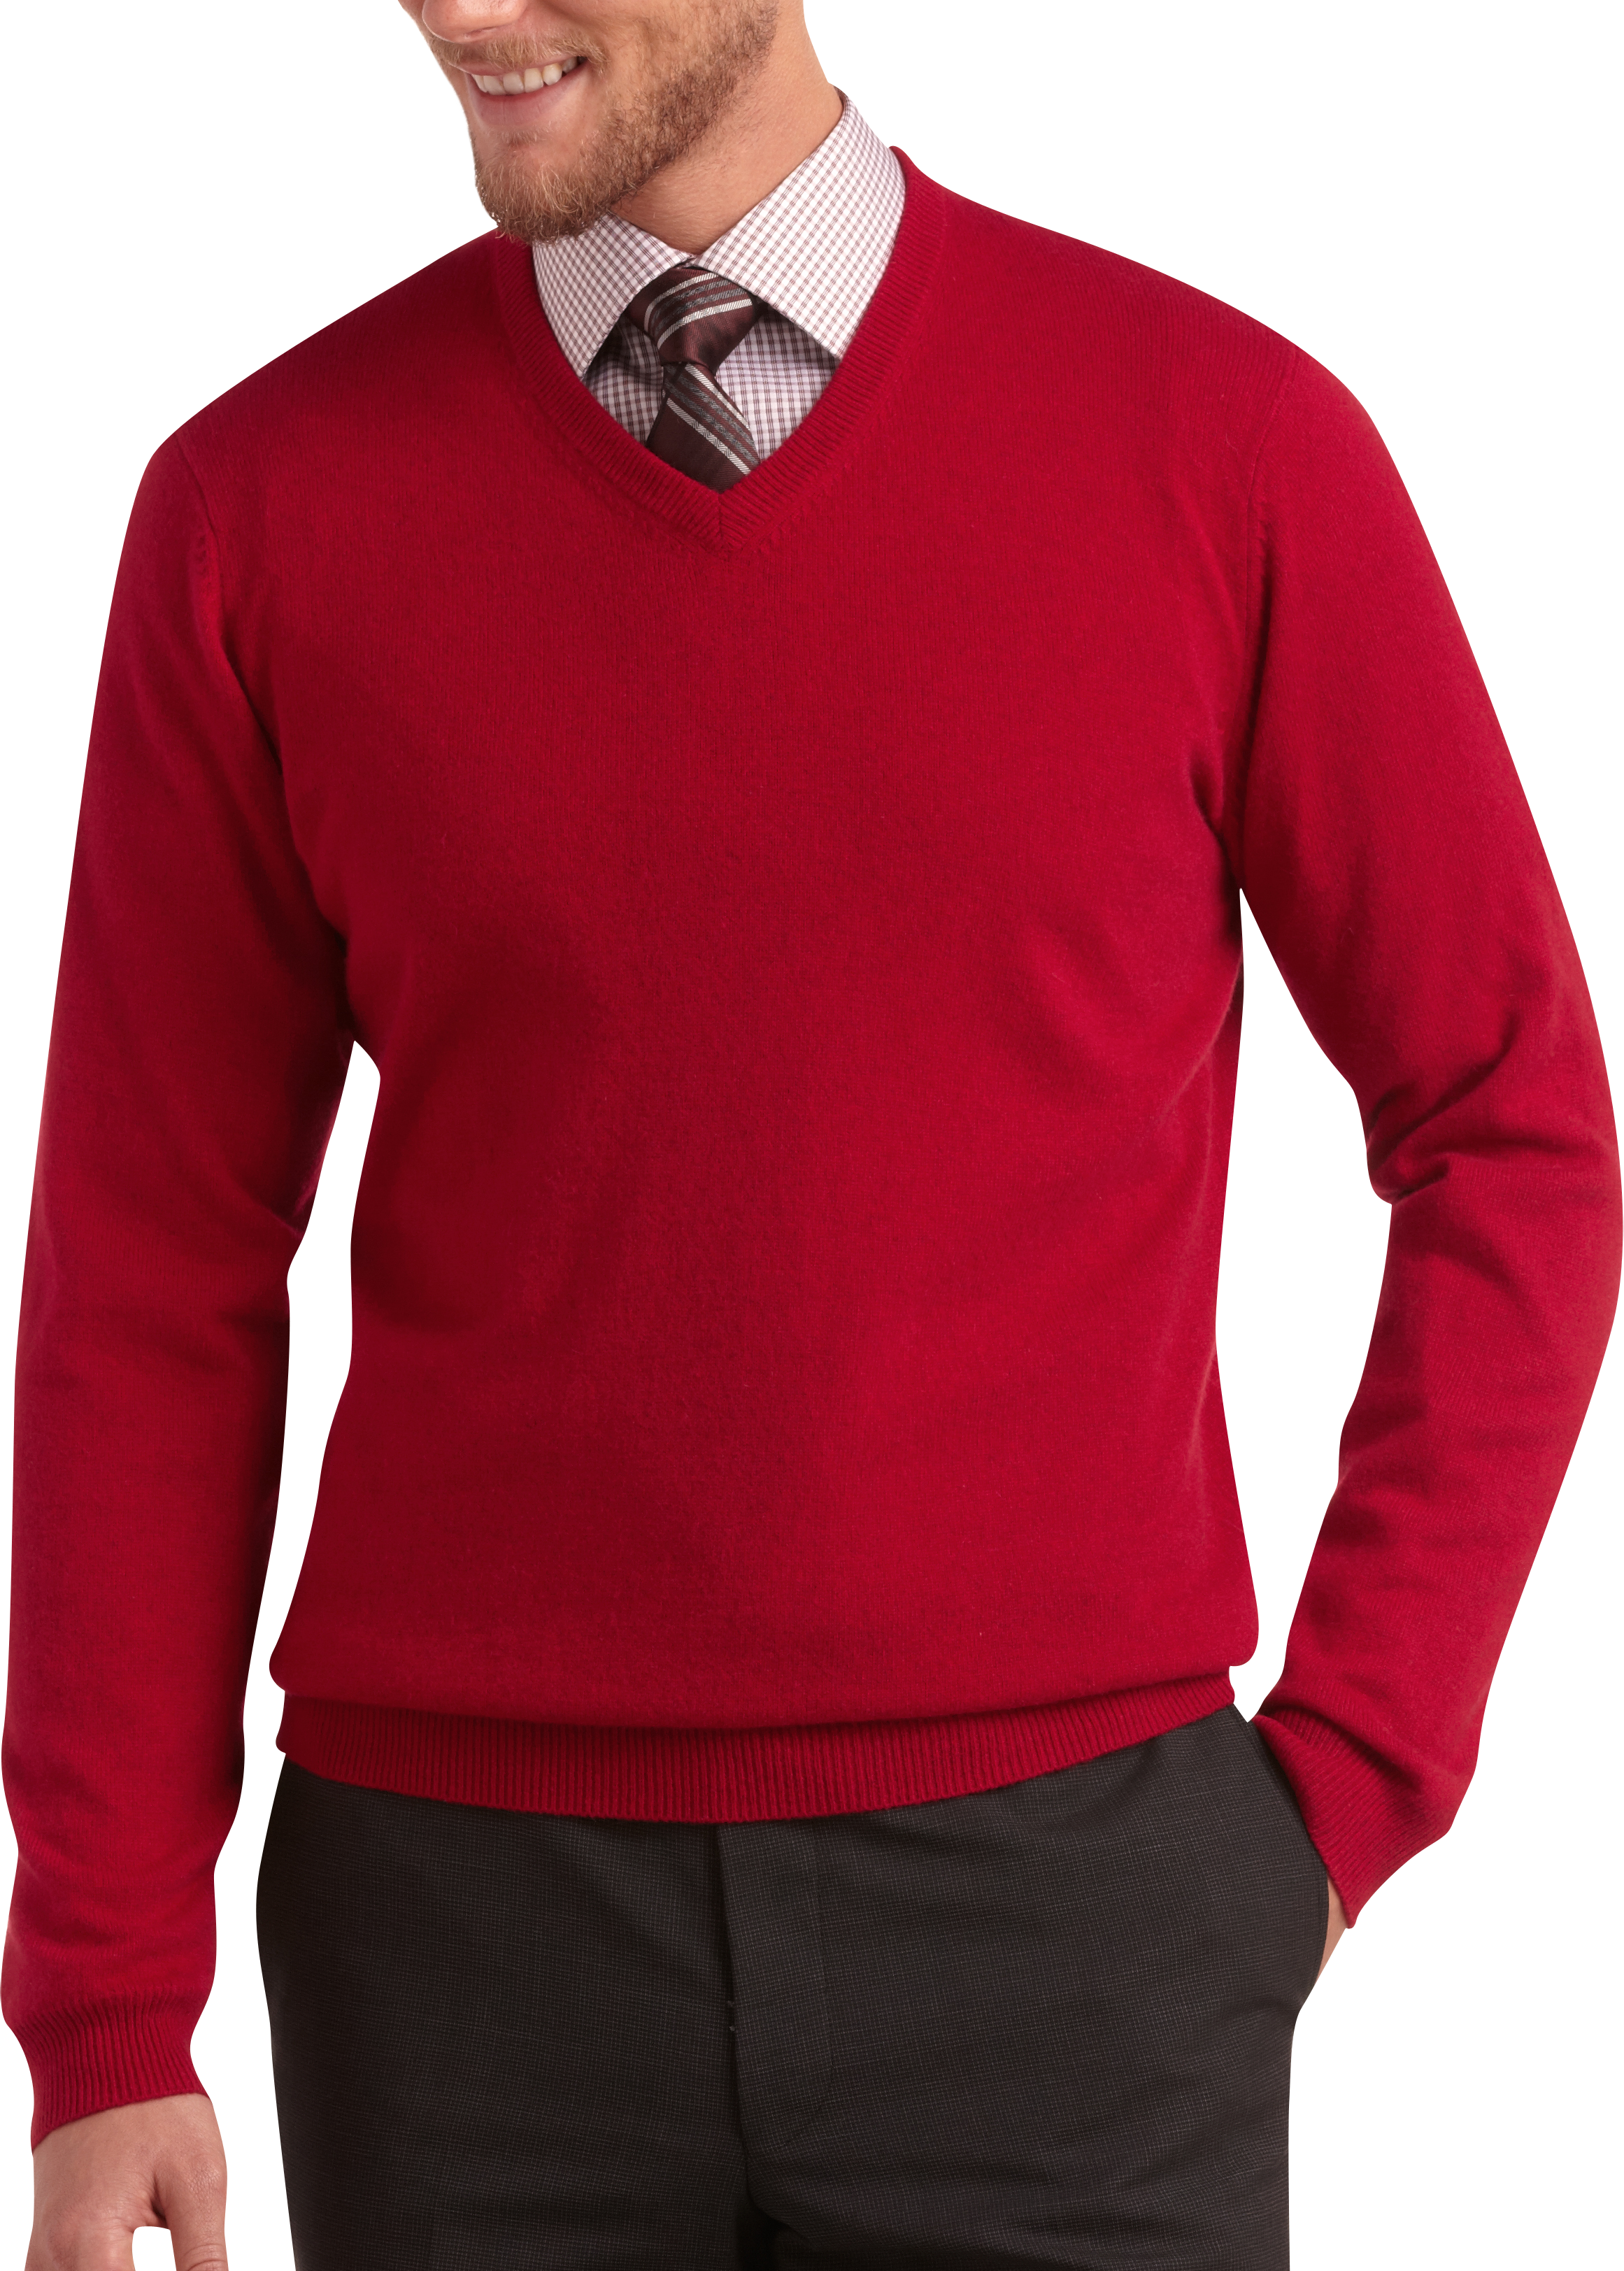 Pronto Uomo Red Cashmere V-Neck Sweater - Men's Sale | Men's Wearhouse